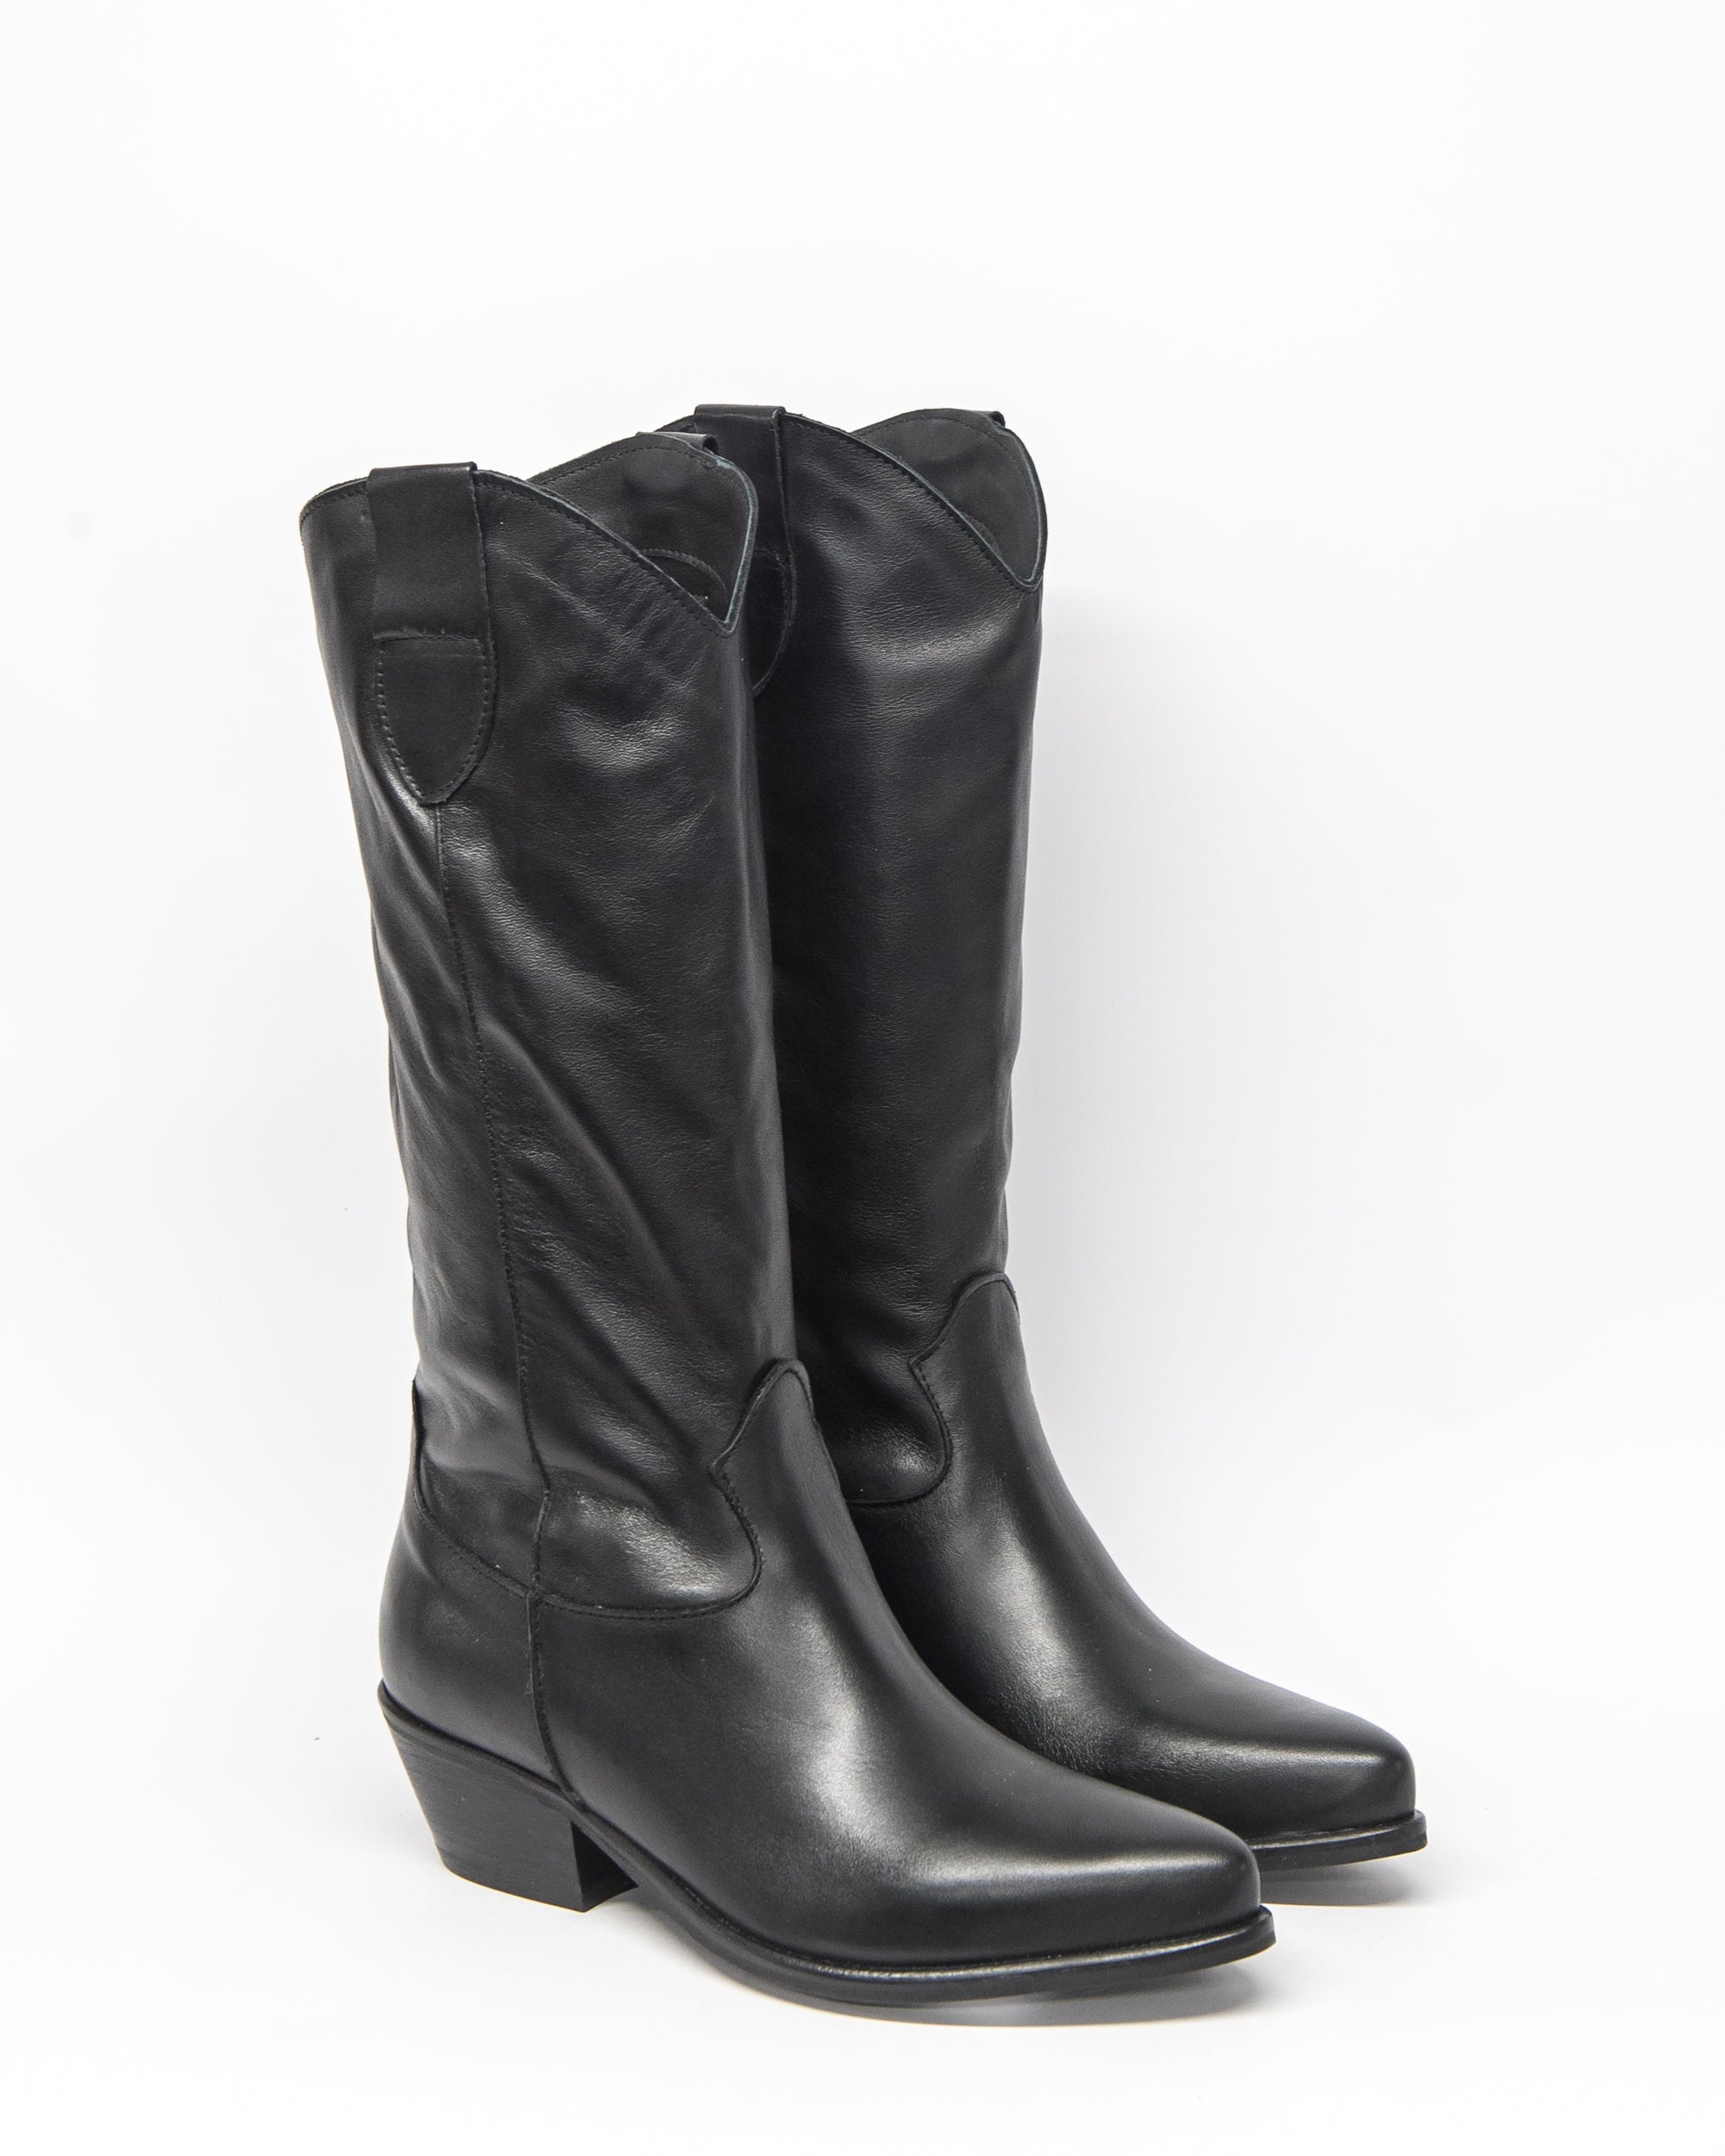 sprite boot - black leather